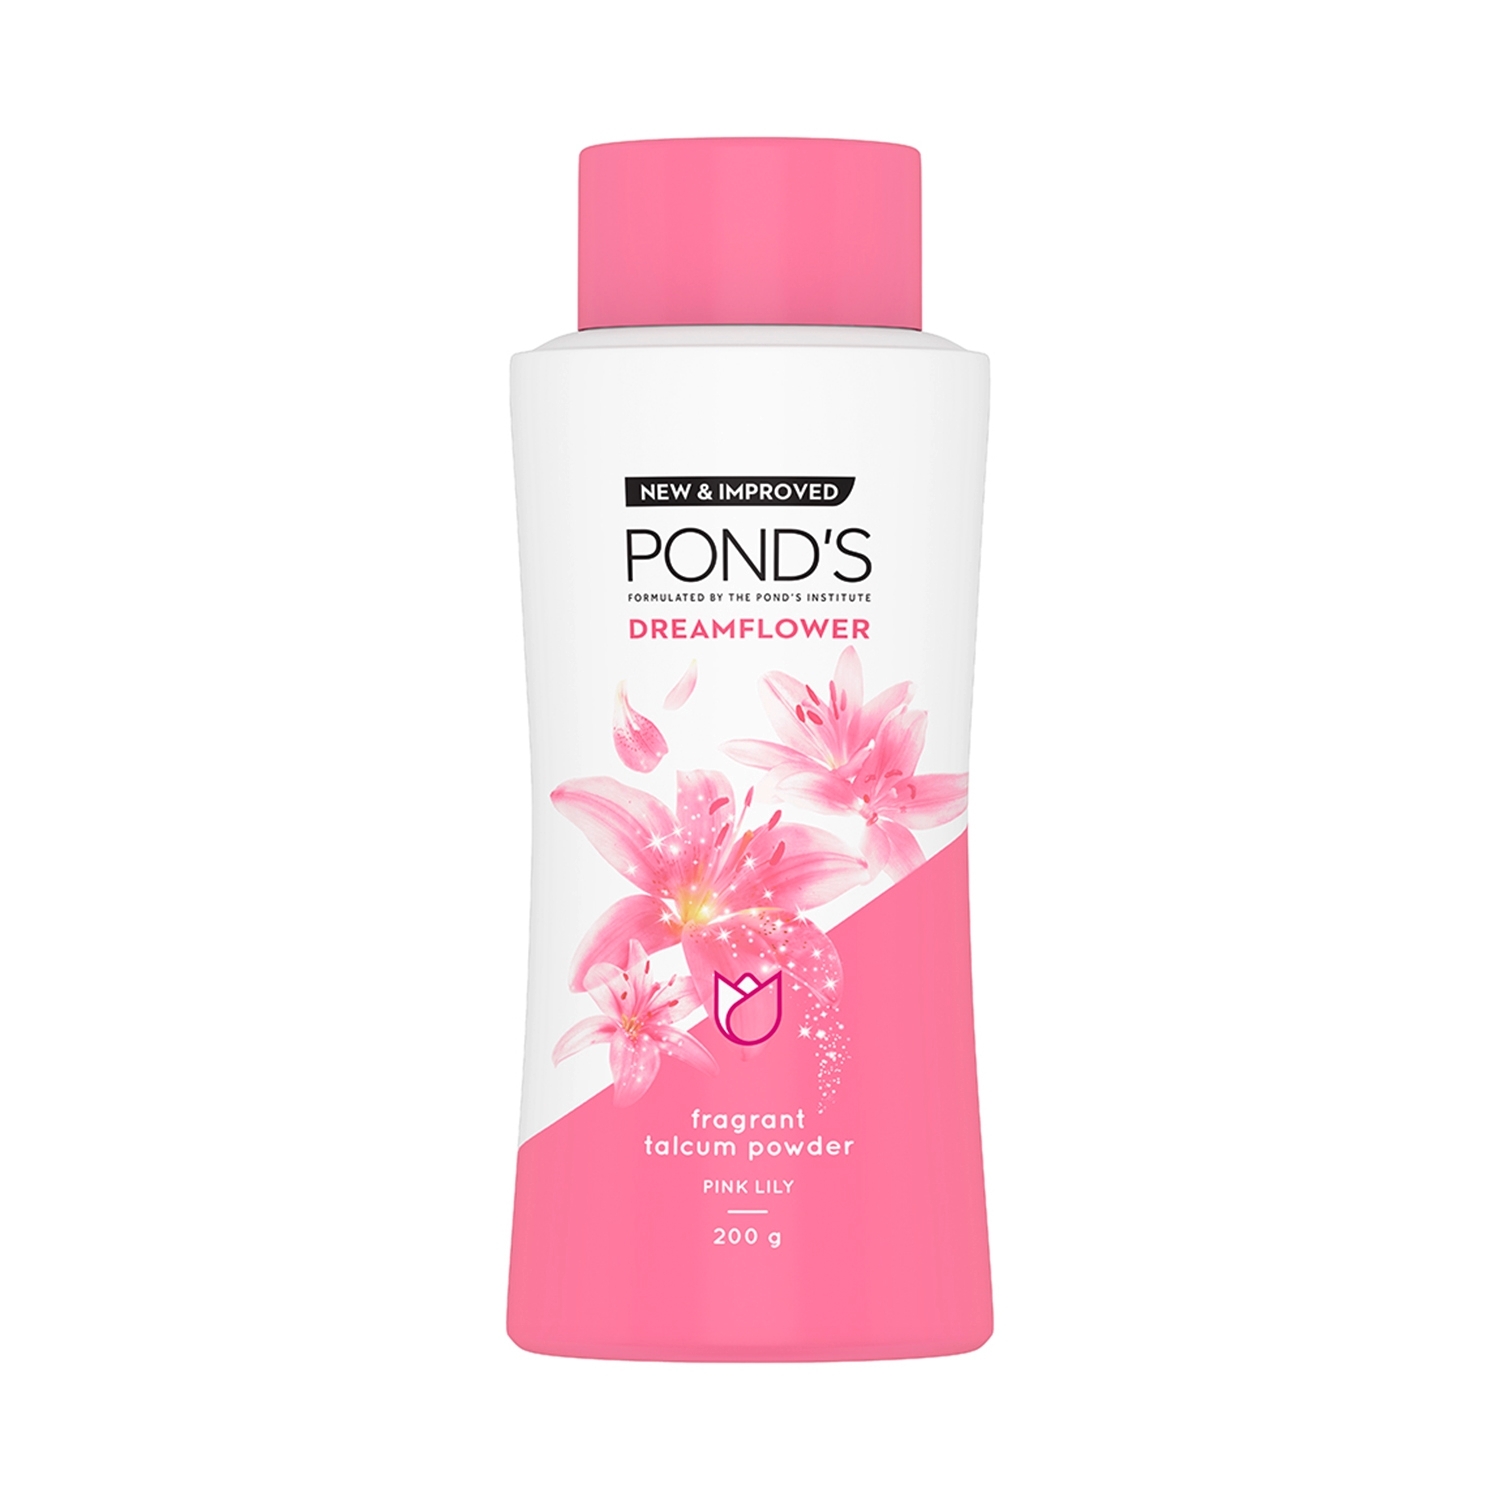 Pond's | Pond's Dreamflower Fragrant Pink Lily Talc Powder - (200g)